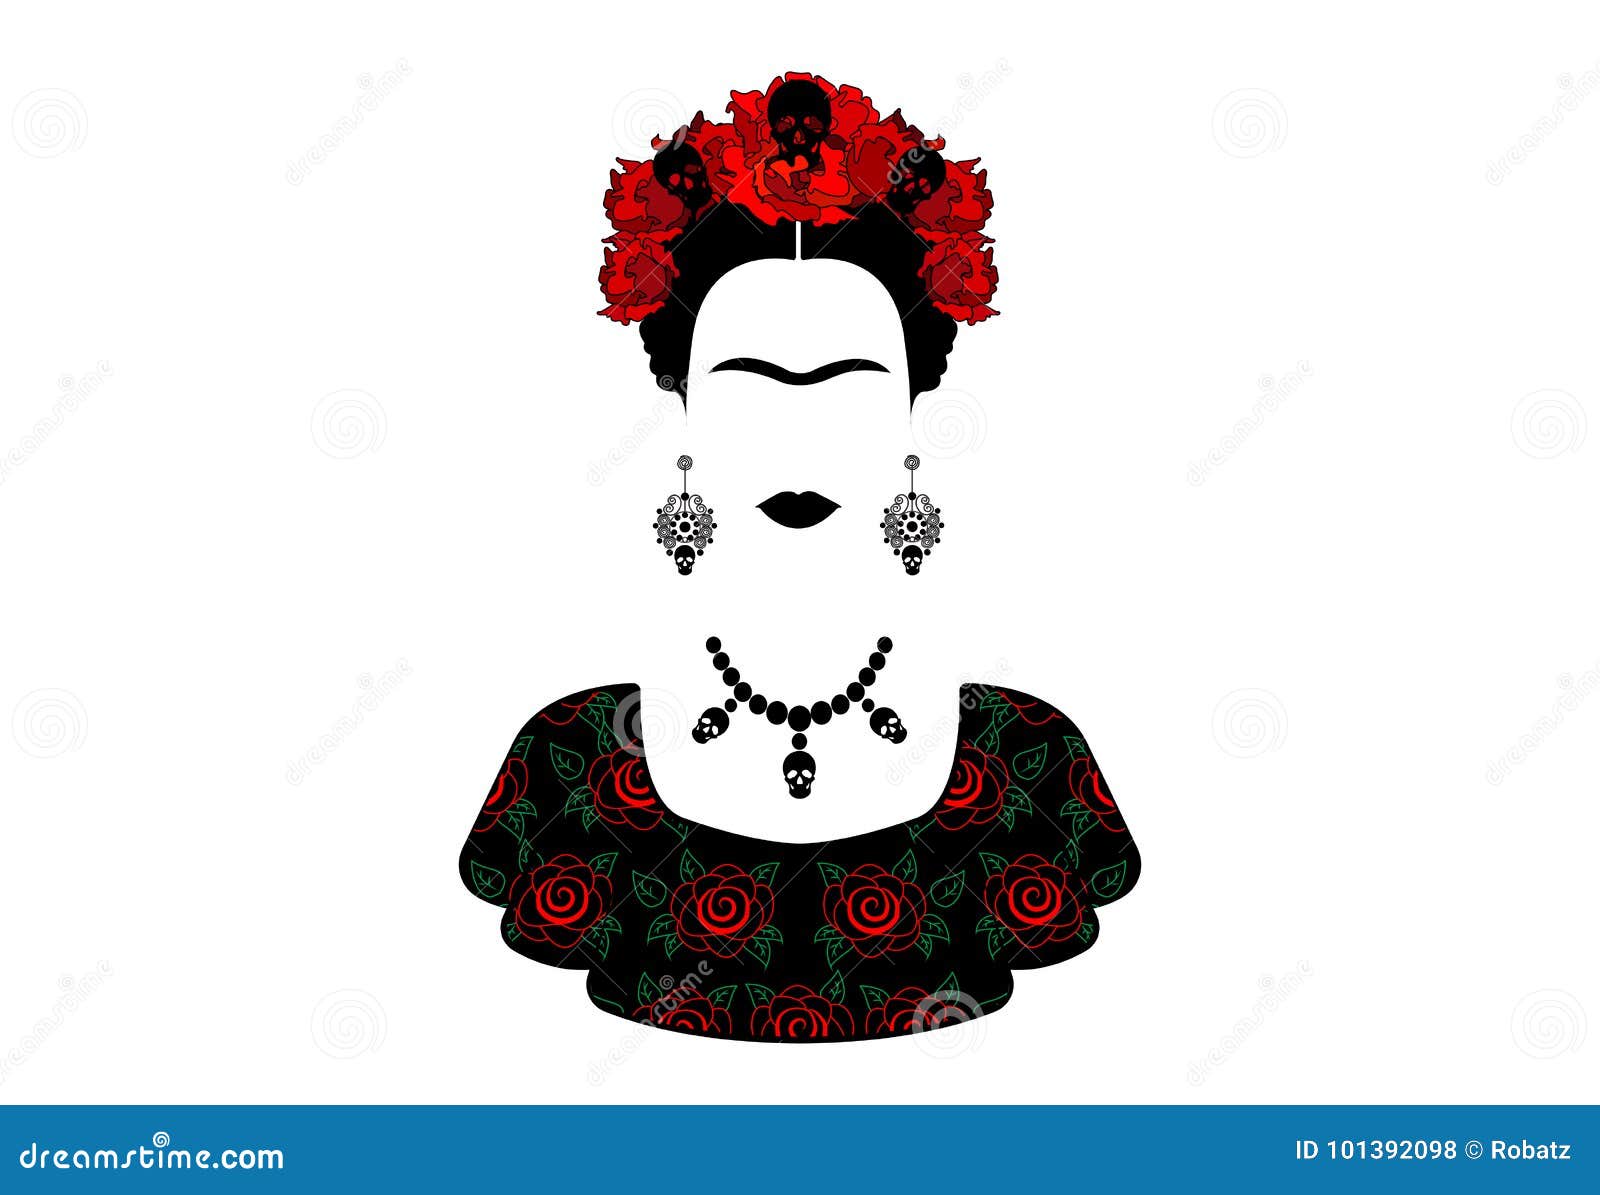 Missha Announces Frida Kahlo x Missha Tension Compact | Teen Vogue